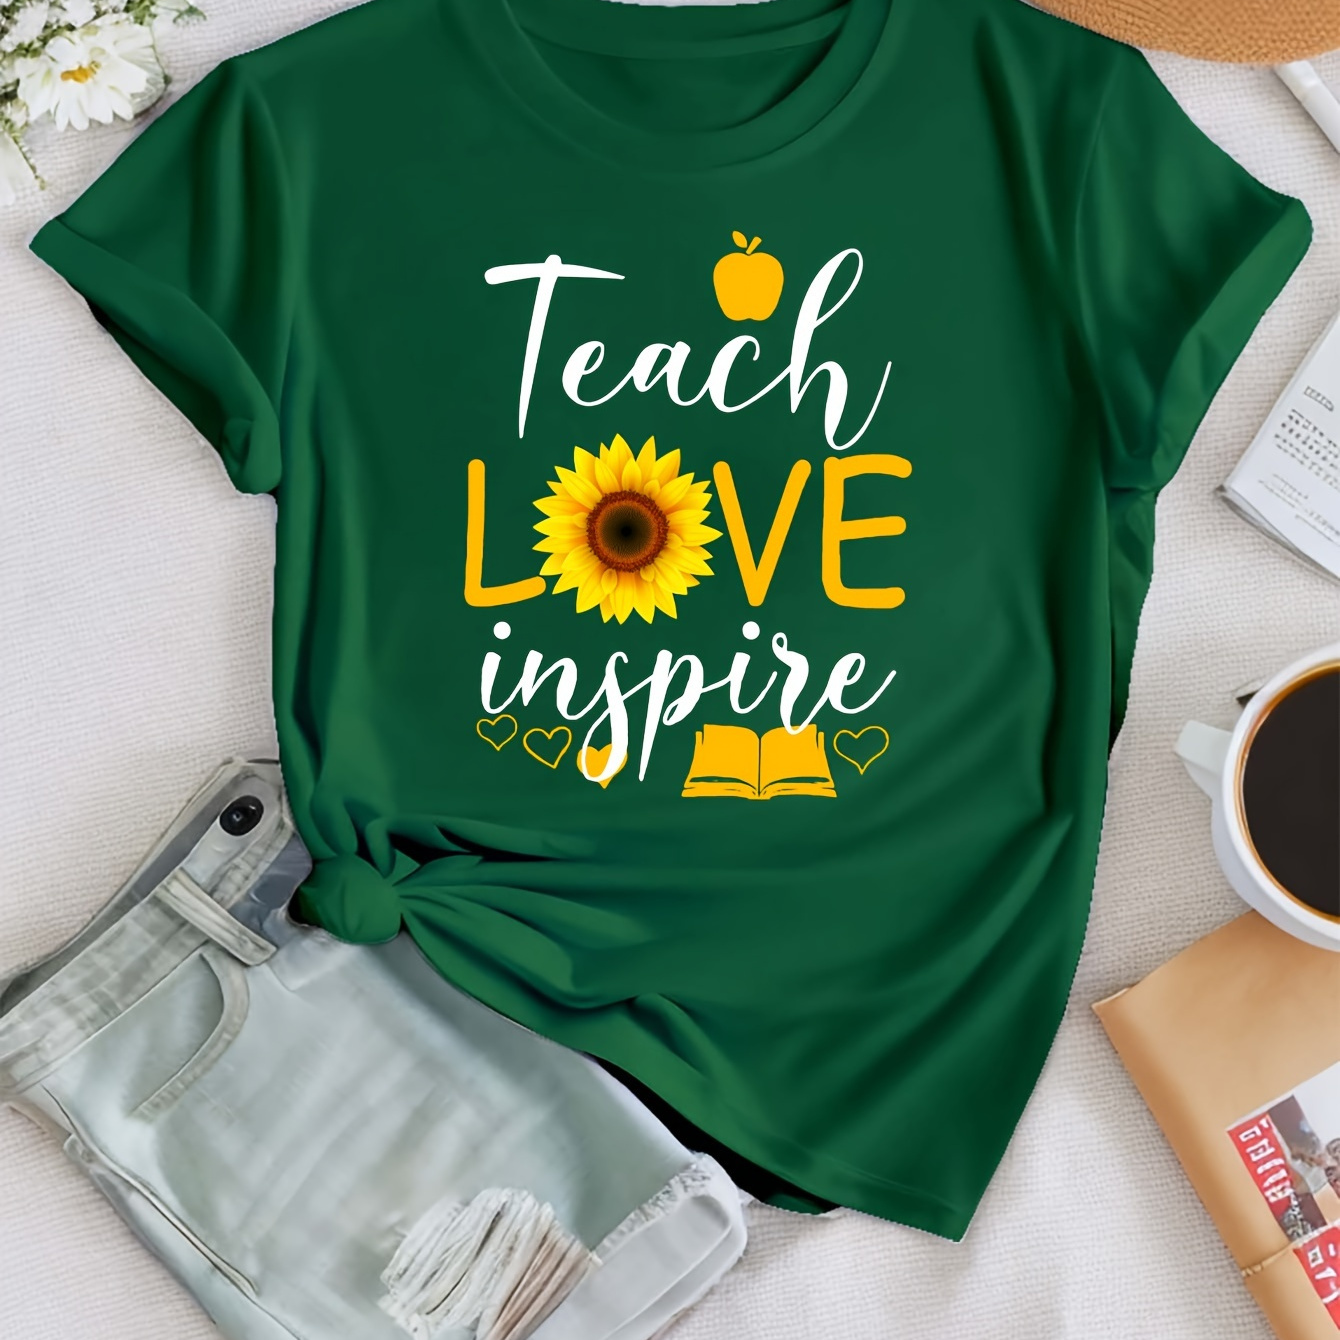 

Teachers Day Teach Love Print T-shirt, Short Sleeve Crew Neck Casual Top For Summer & Spring, Women's Clothing